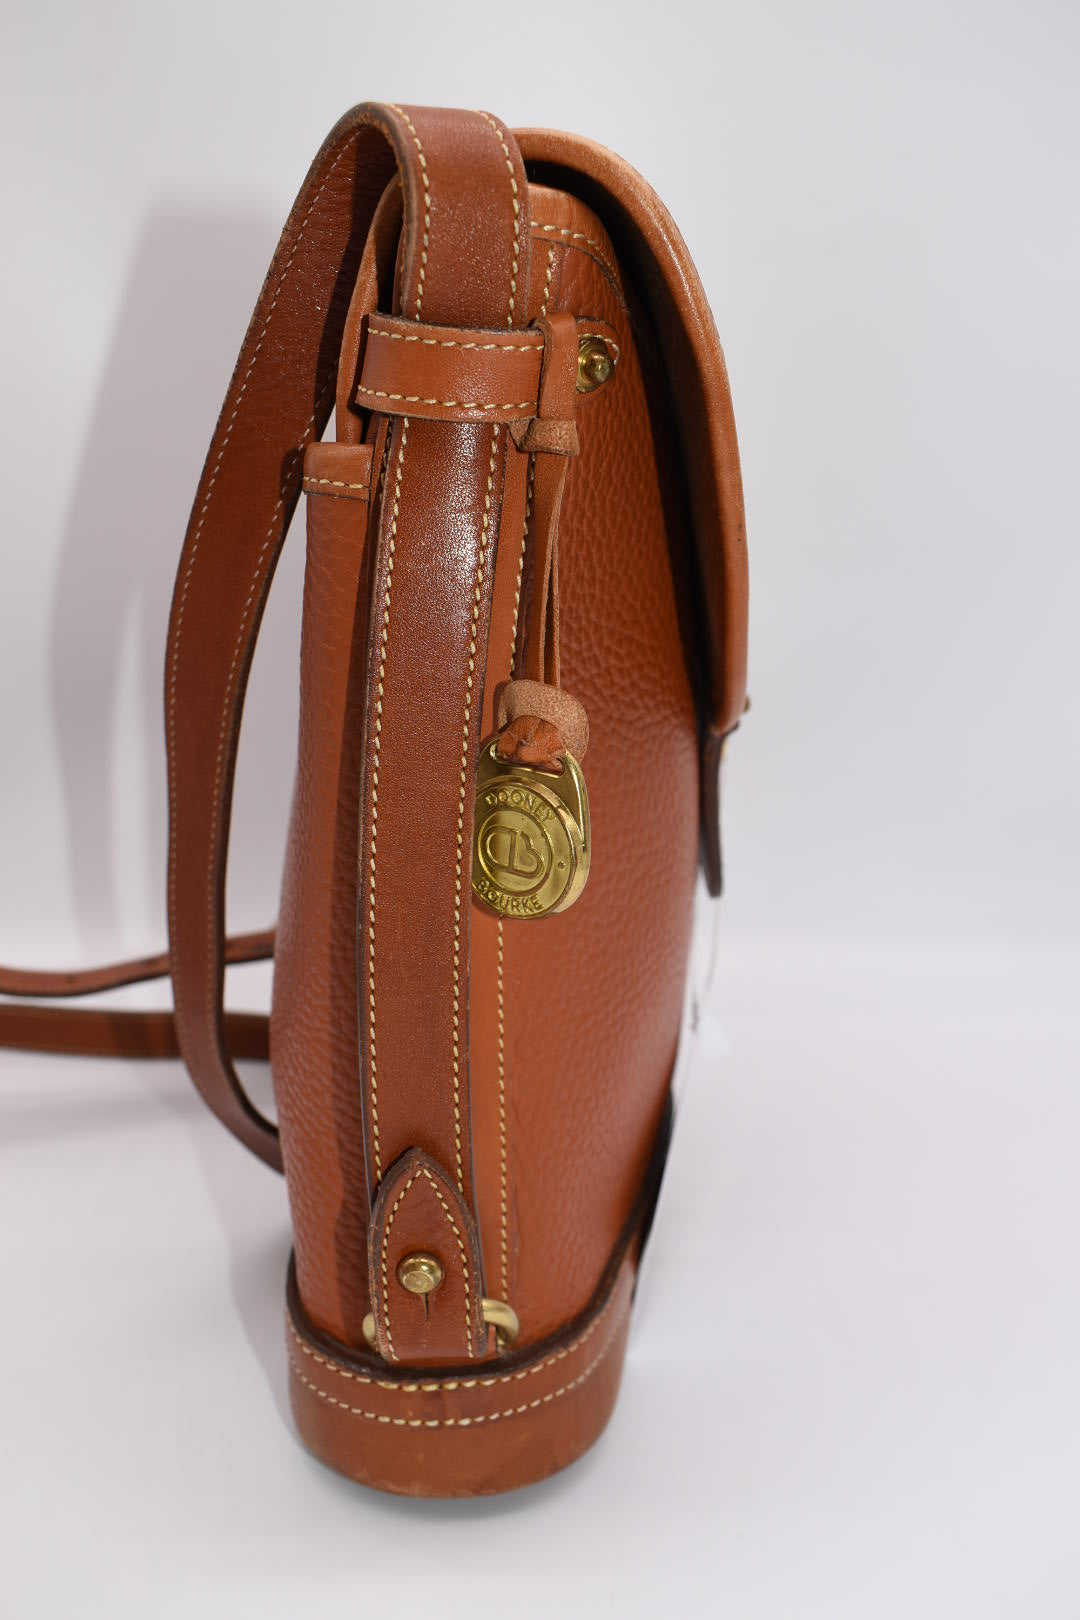 Vintage Dooney & Bourke Cavalry Spectator All-Weather Leather Crossbody Bag